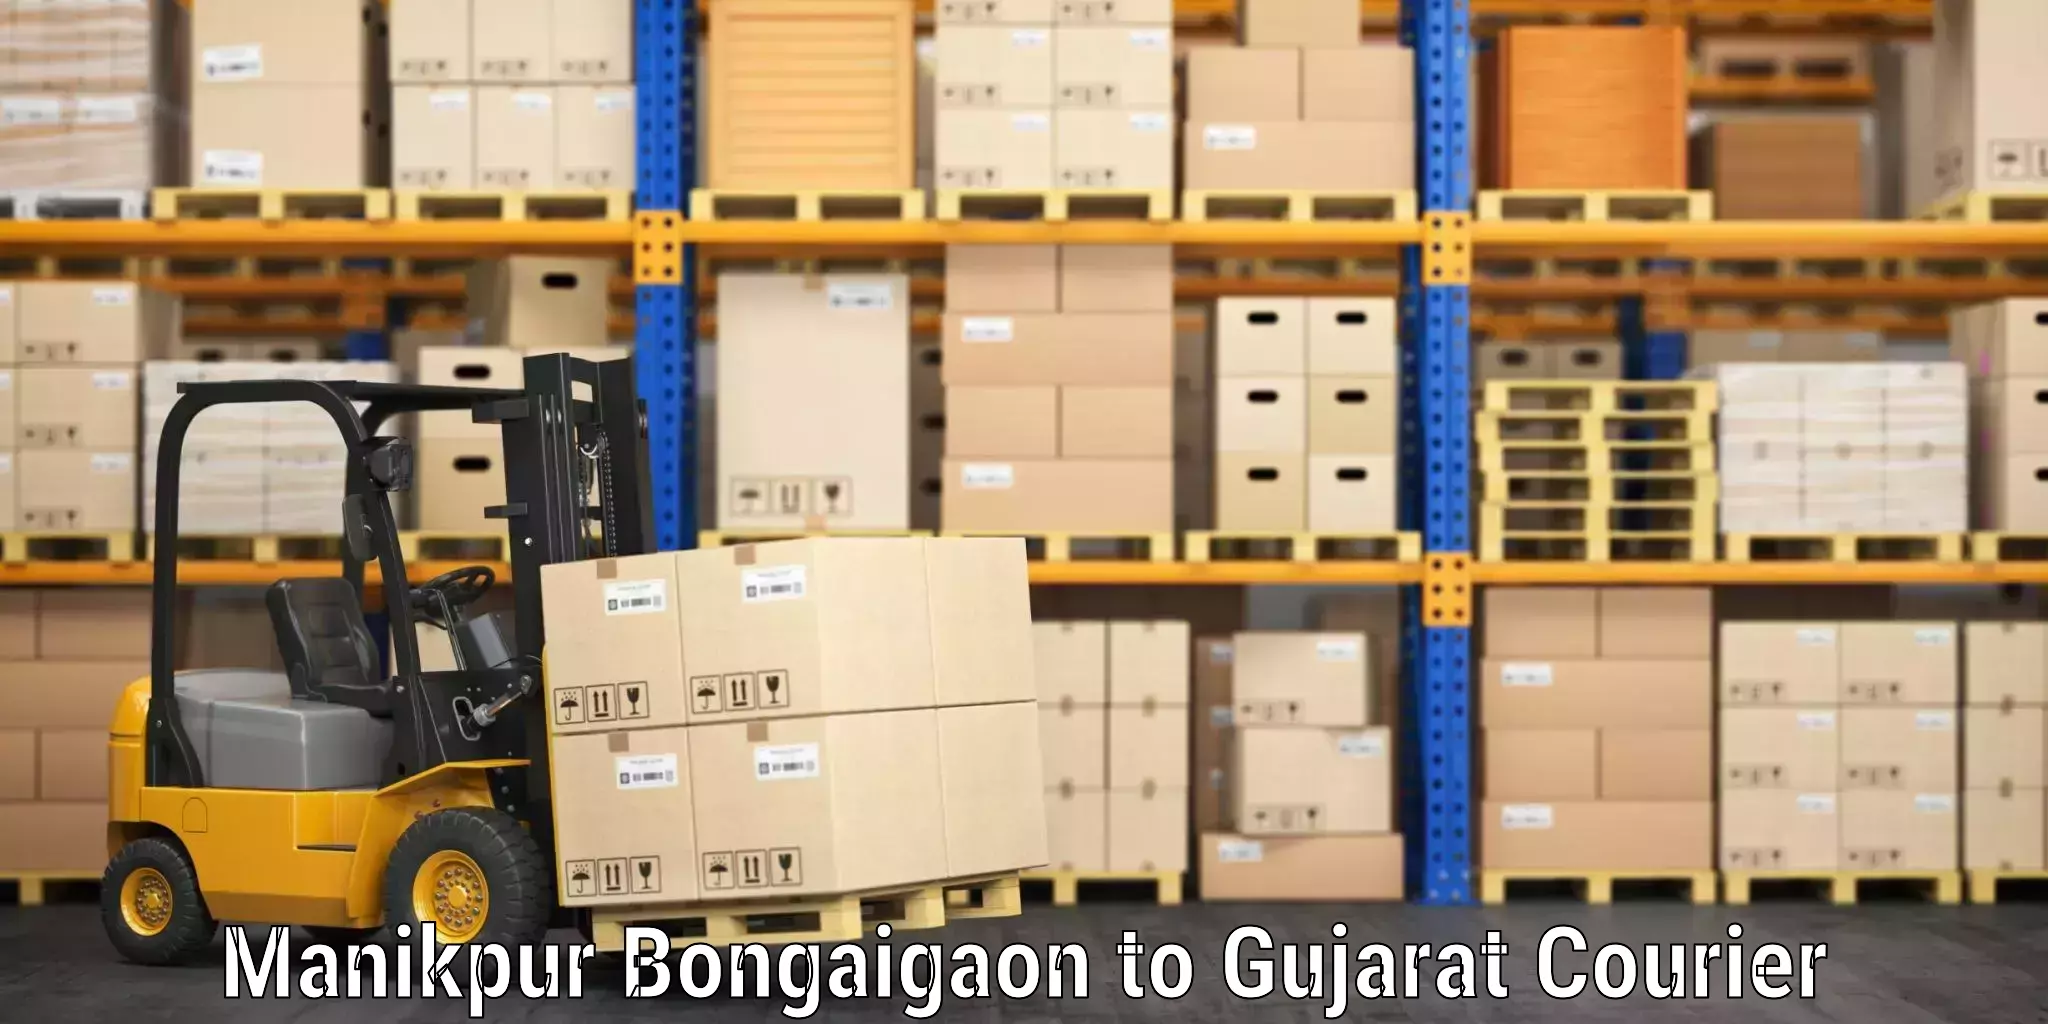 Luggage shipment specialists Manikpur Bongaigaon to Vijapur